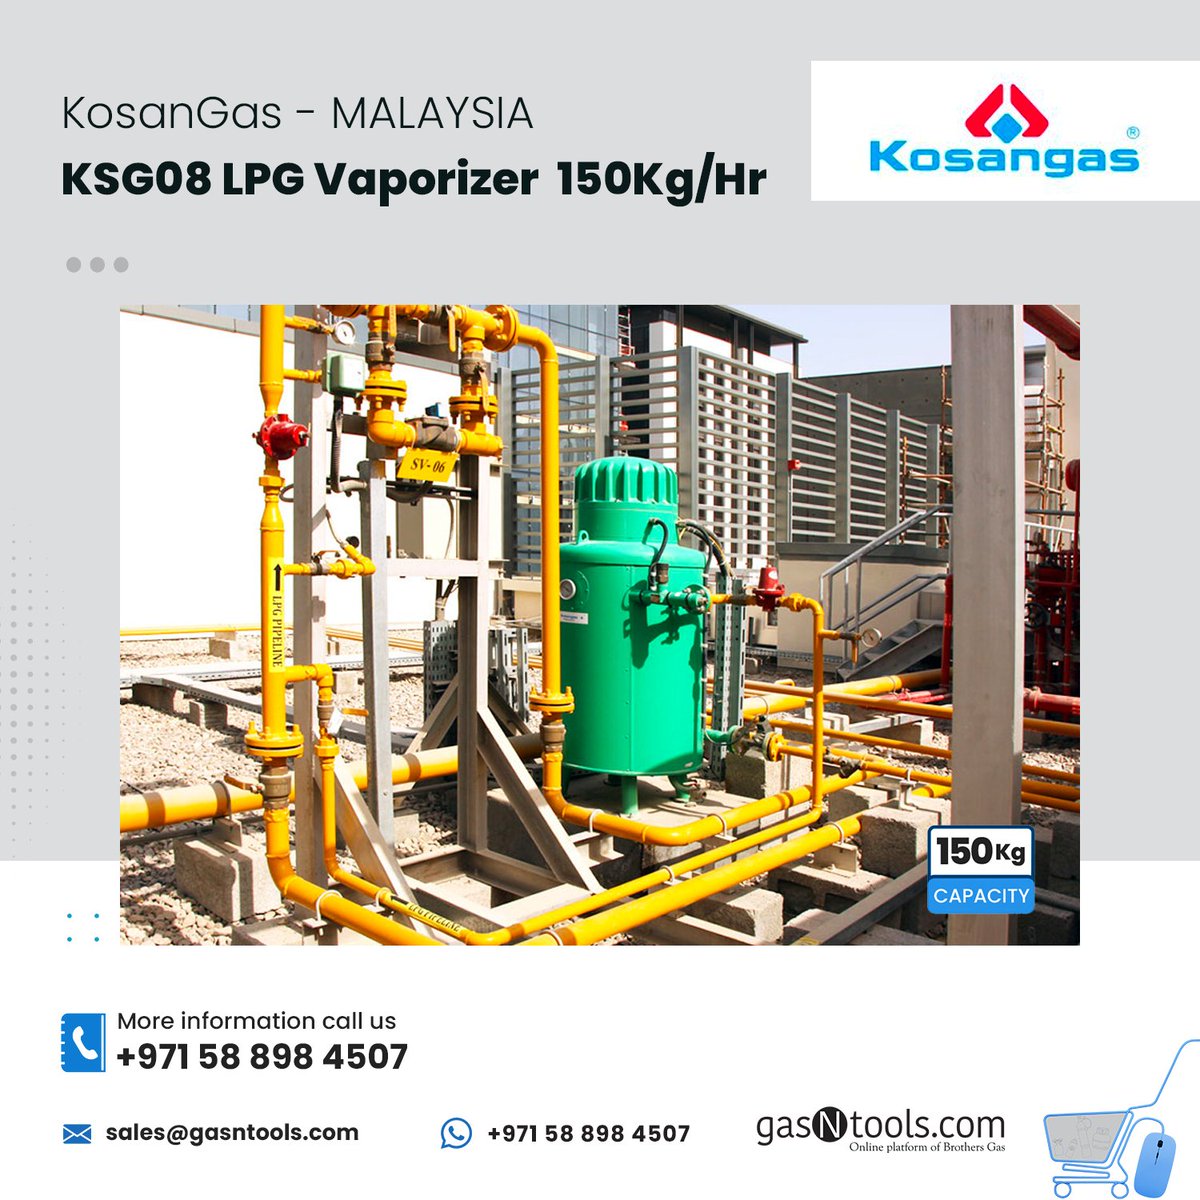 Kosangas KSG08 Electric Water Bath Type LPG Vaporizer – Malaysia 🇲🇾

📞 Call/WhatsApp: +971 58 898 4507
📧 sales@gasntools.com
🌐 gasntools.com

#gasntools #gasequipments #gasinstallation #lpgvaporizers #oilandgas #gasstorage #MENA #UAE #Oman #KSA #Asia #Europe